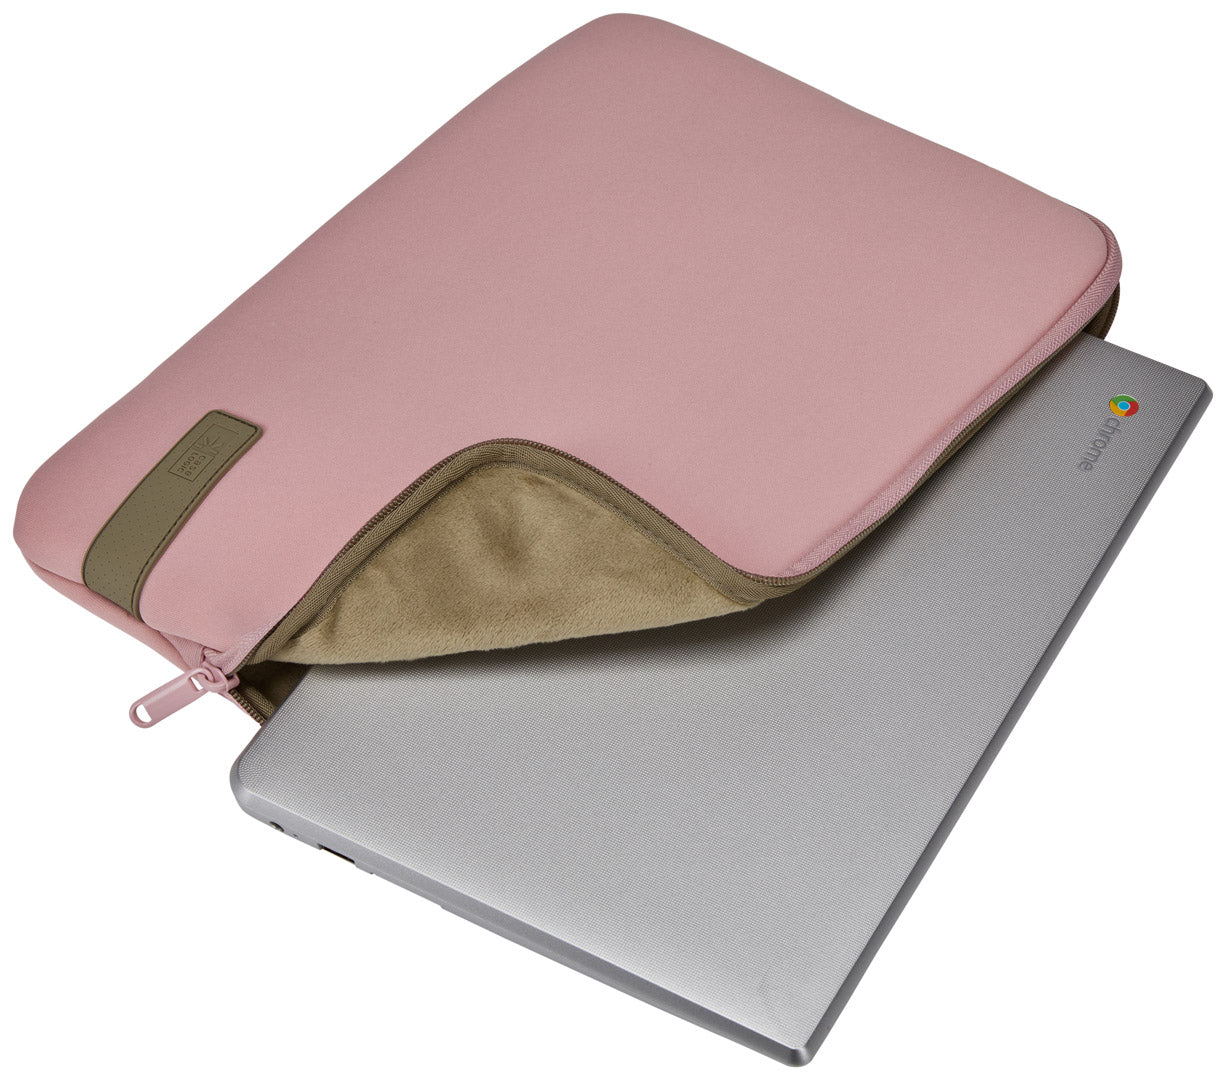 Case Logic 4700 Reflect Laptop Sleeve 15.6 REFPC-116 Zephyr Pink/Mermaid